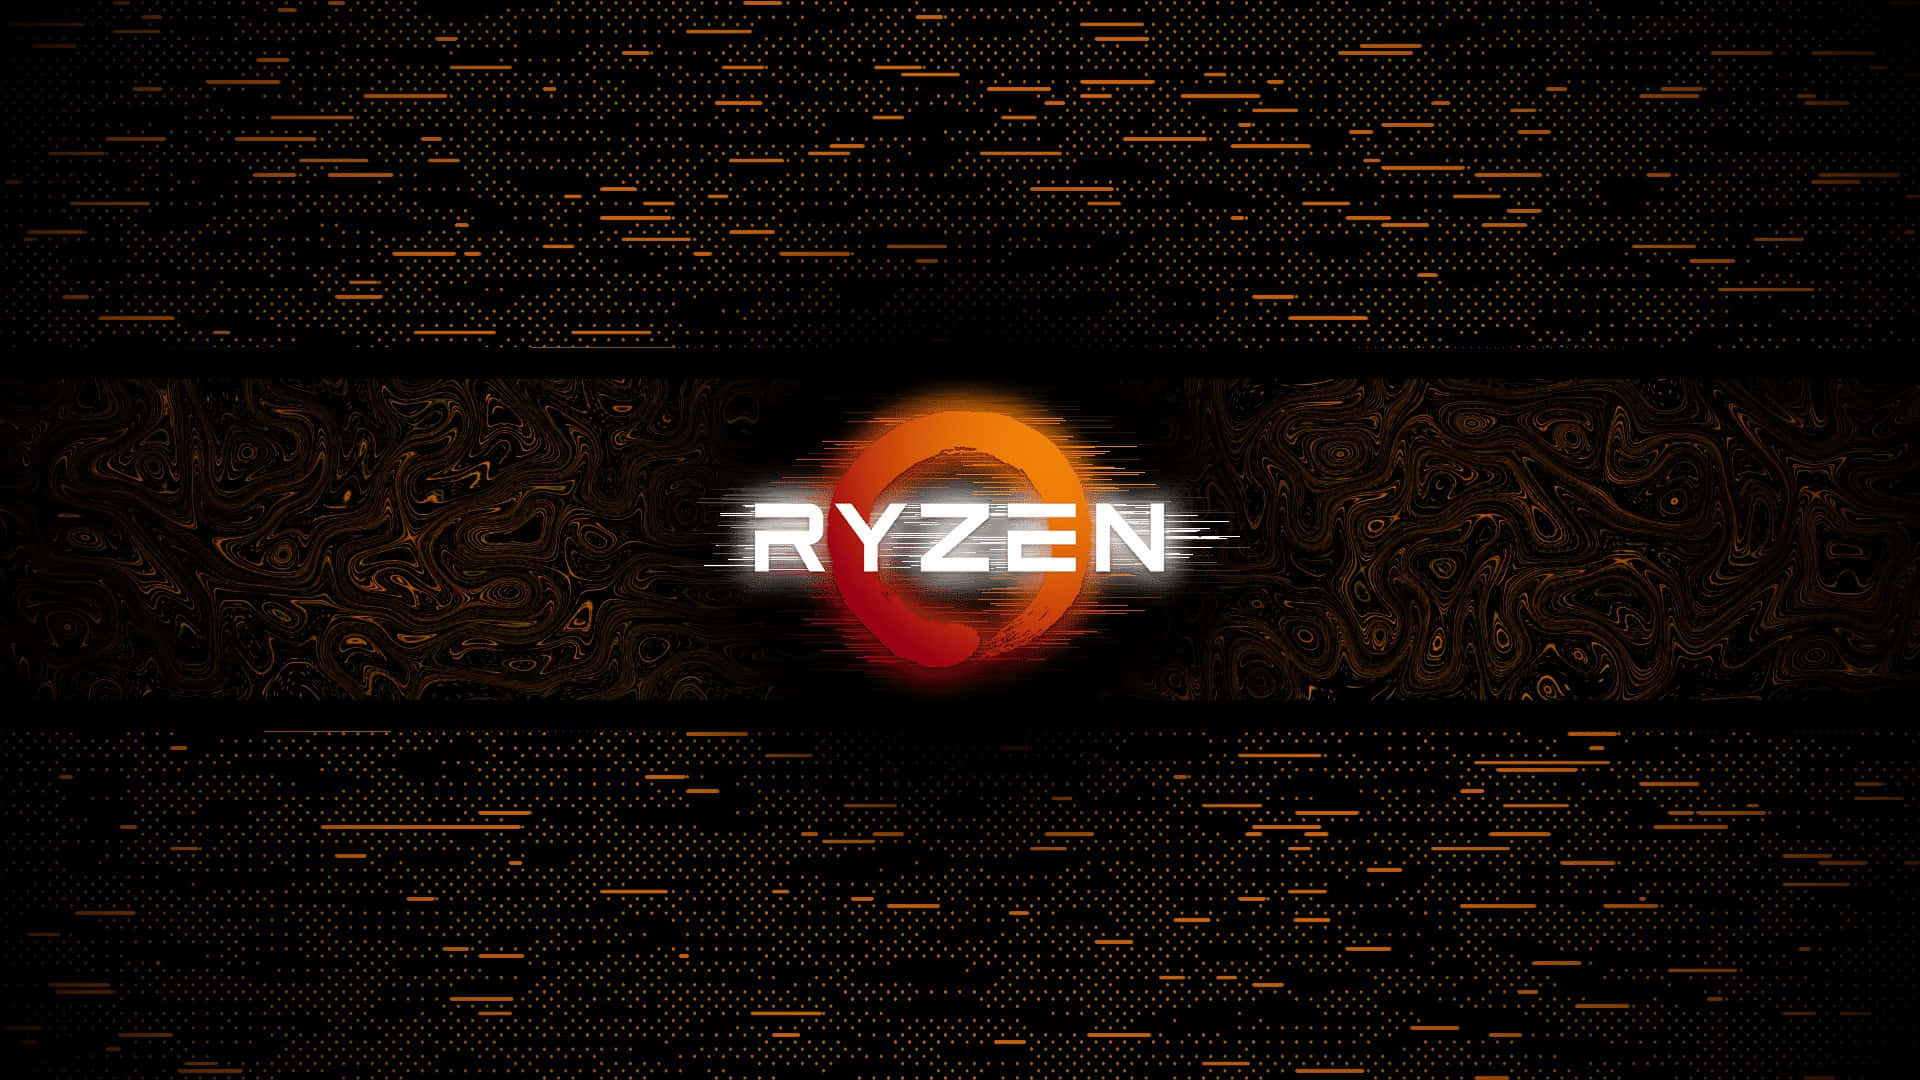 Ryzen Processor Abstract Design Wallpaper